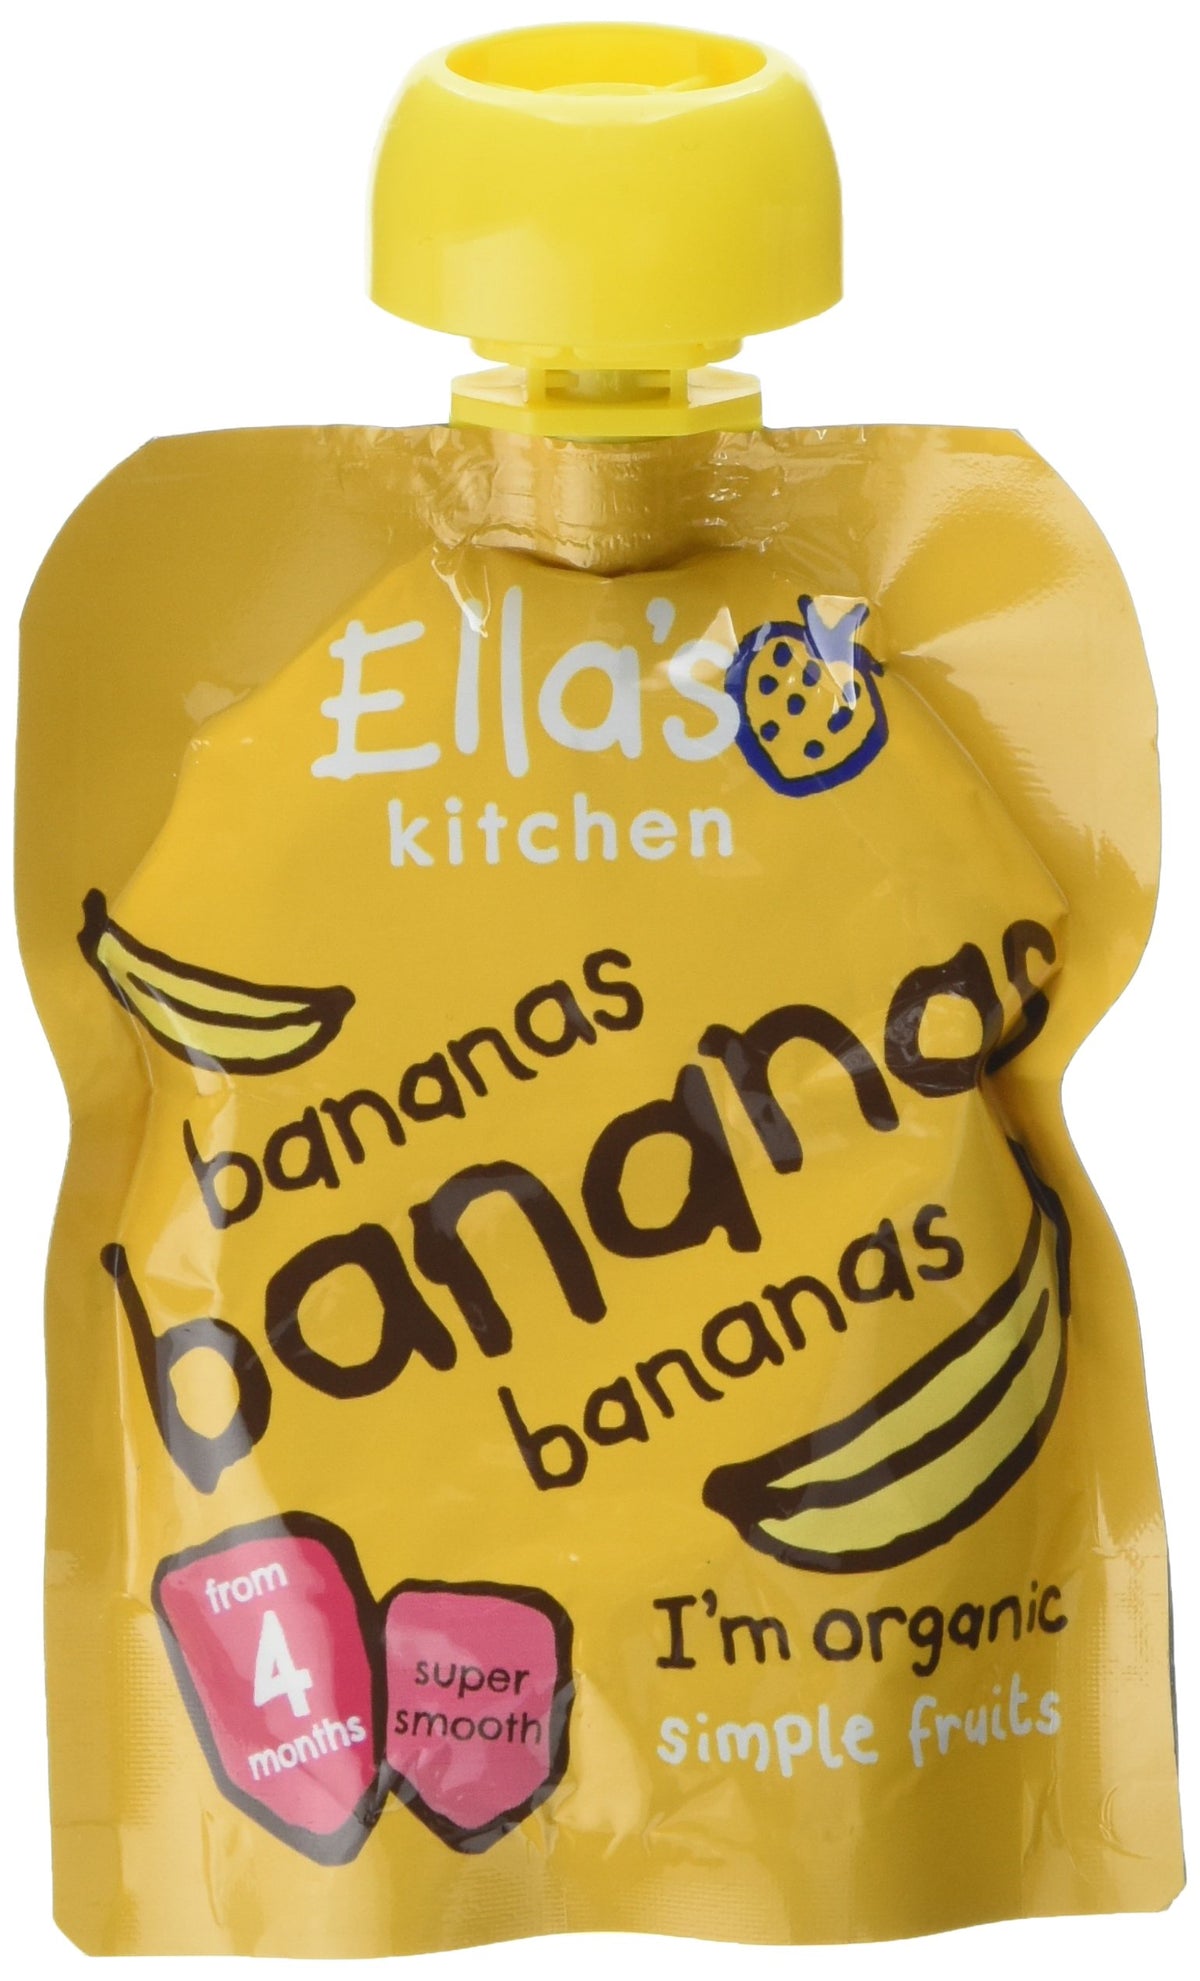 Ellas Kitchen Bananas, Bananas, Bananas Pouch from 4 Months, 70g